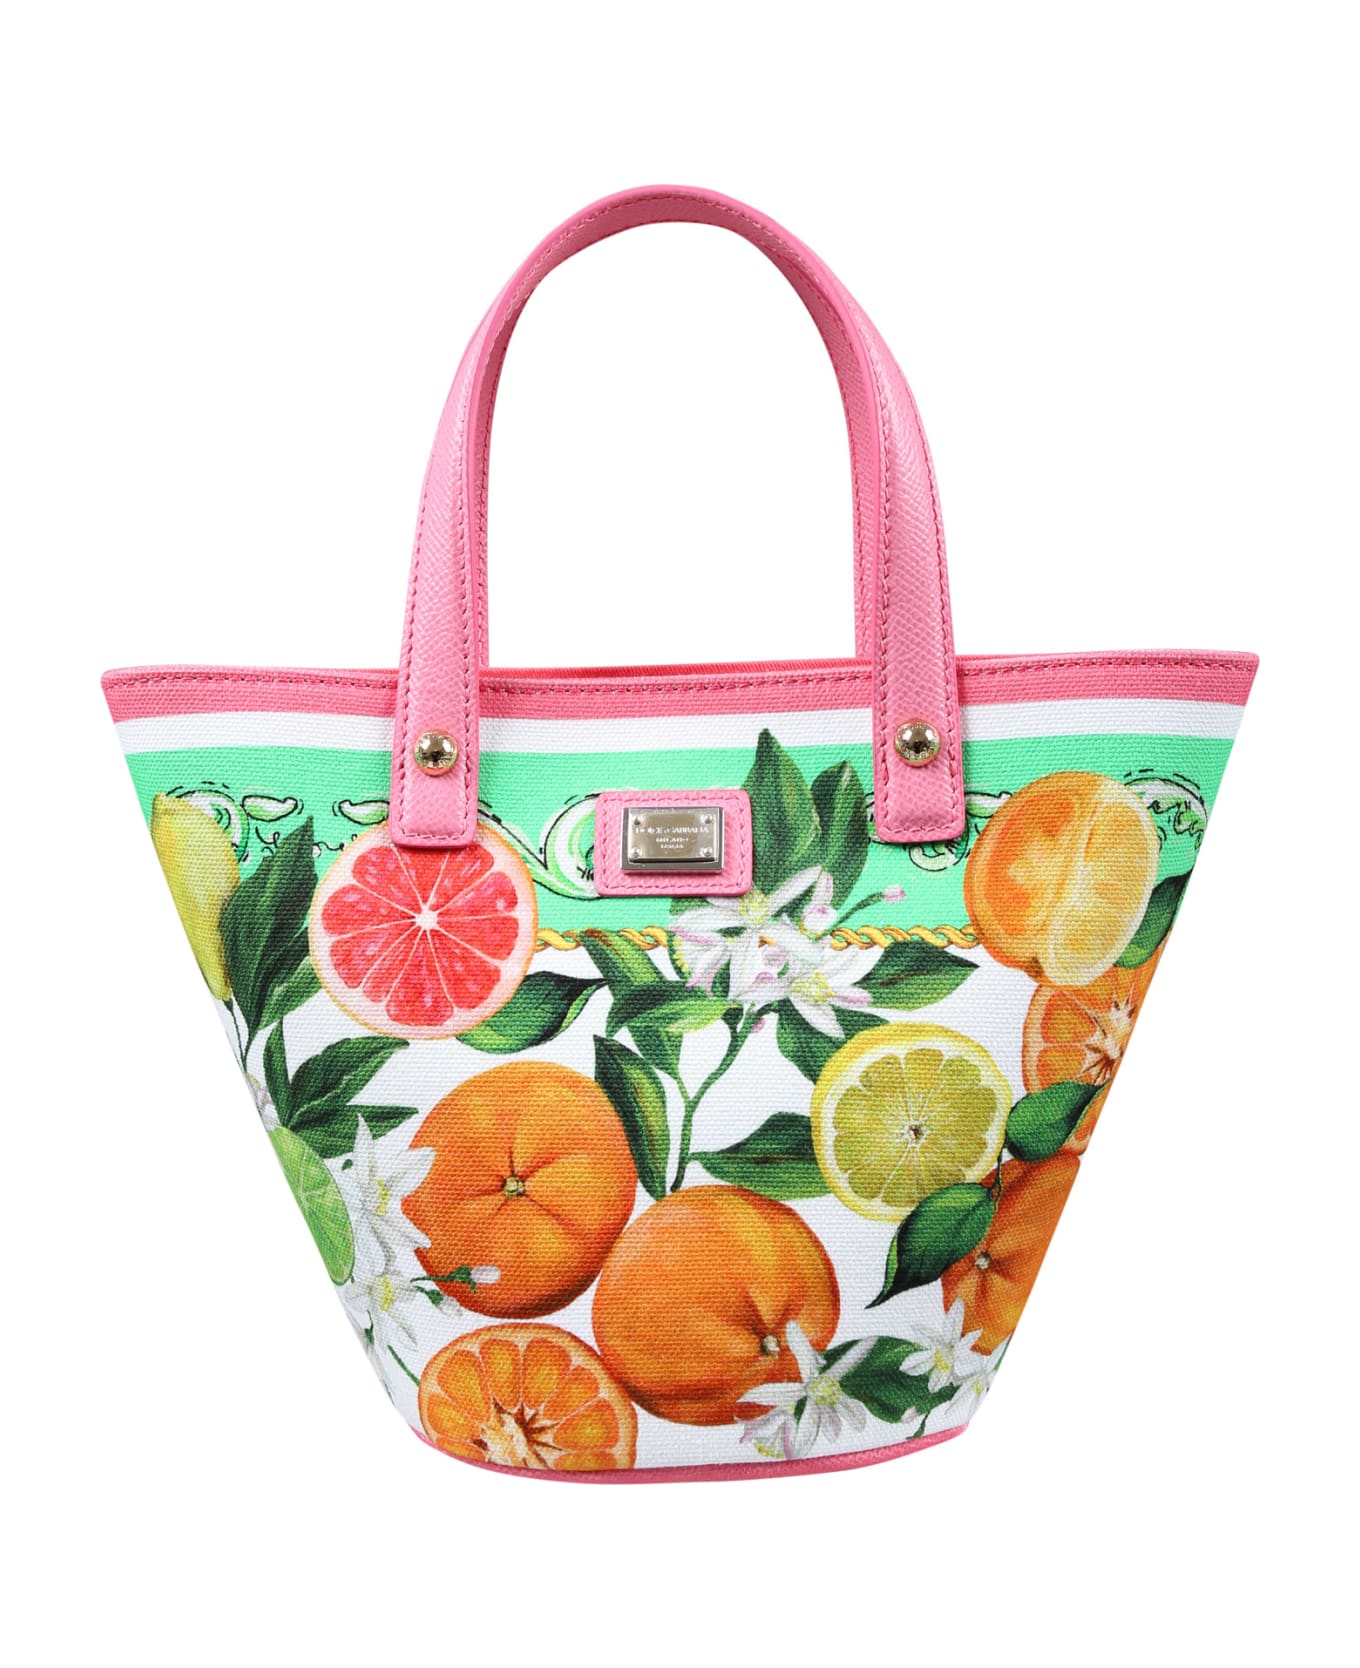 Dolce & Gabbana Multicolor Bag For Girl With Logo - Multicolor